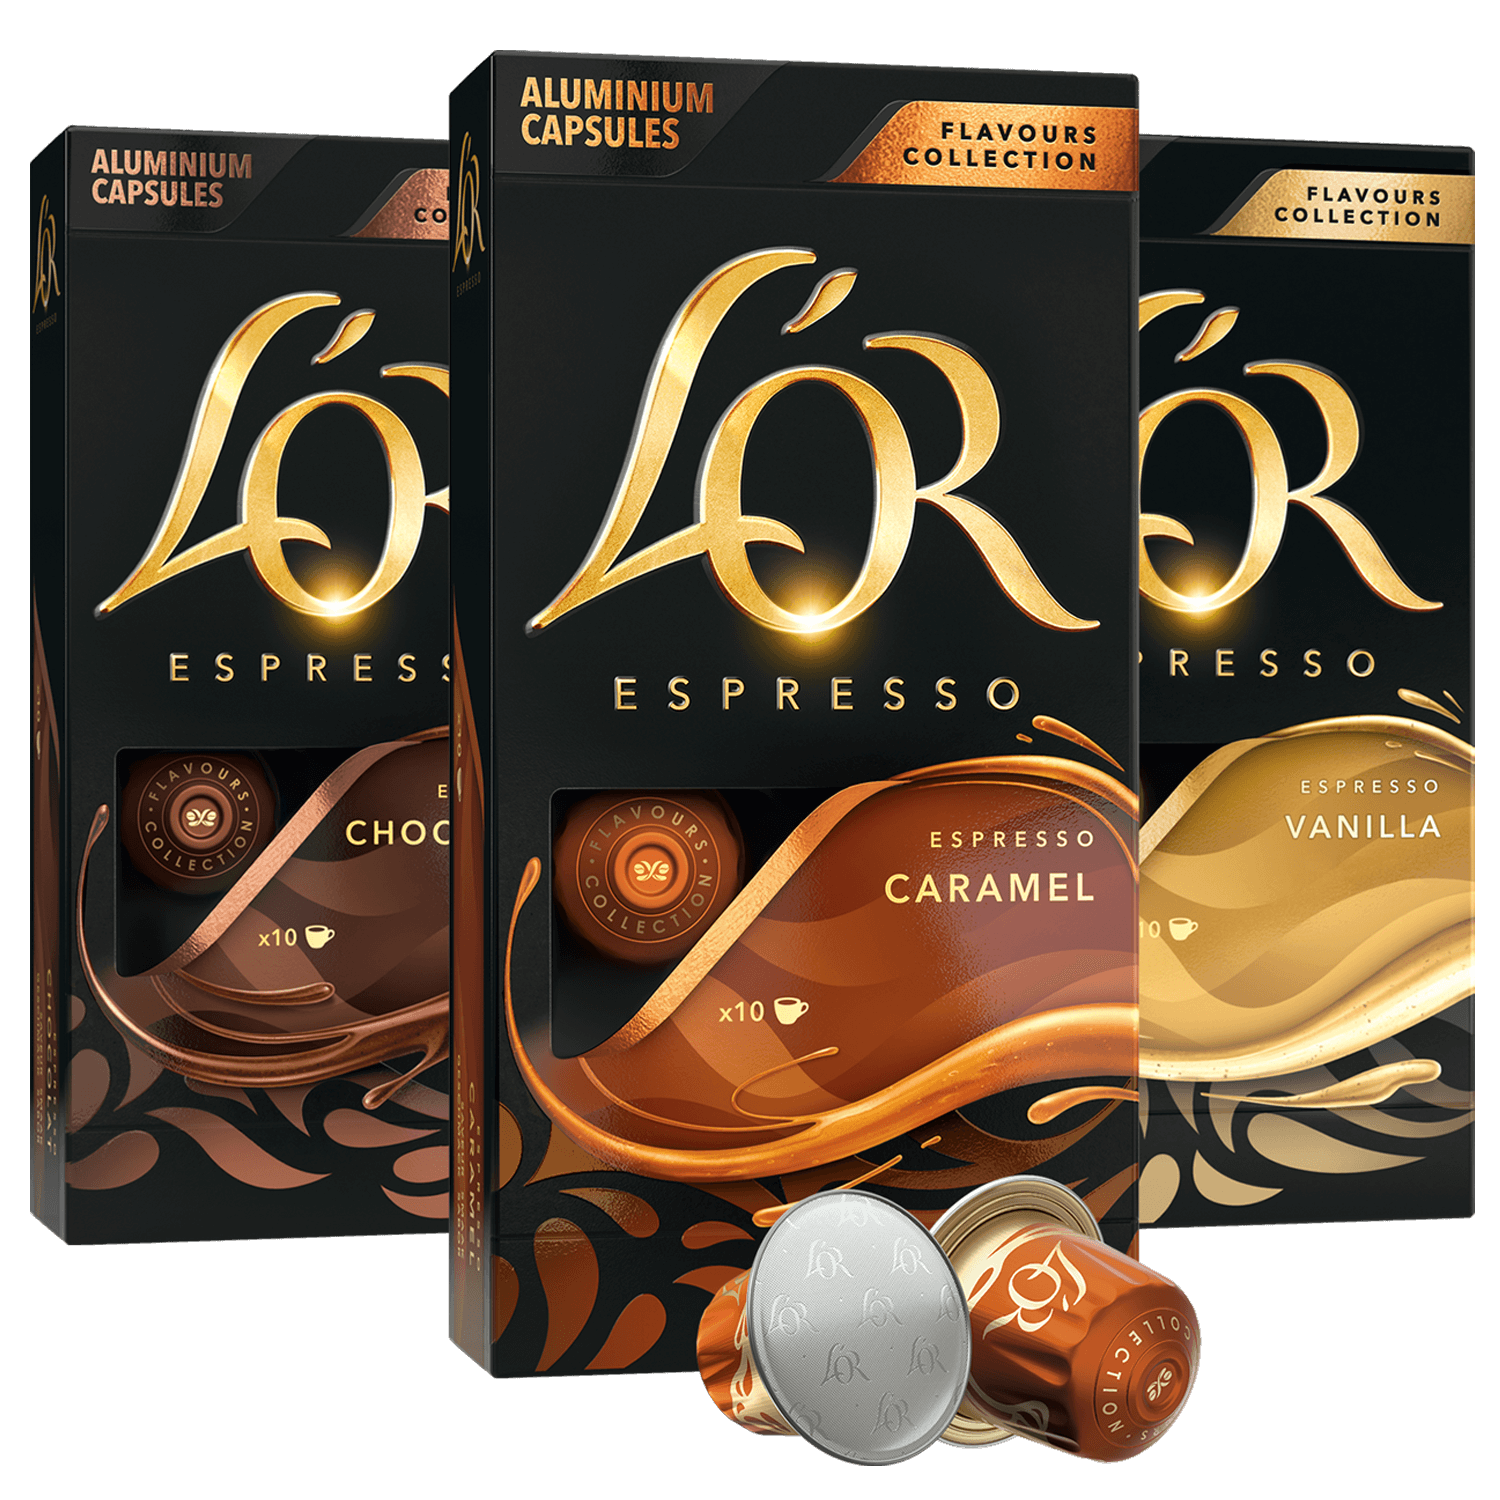 L'OR Espresso Singapore - To celebrate International Coffee Day, L